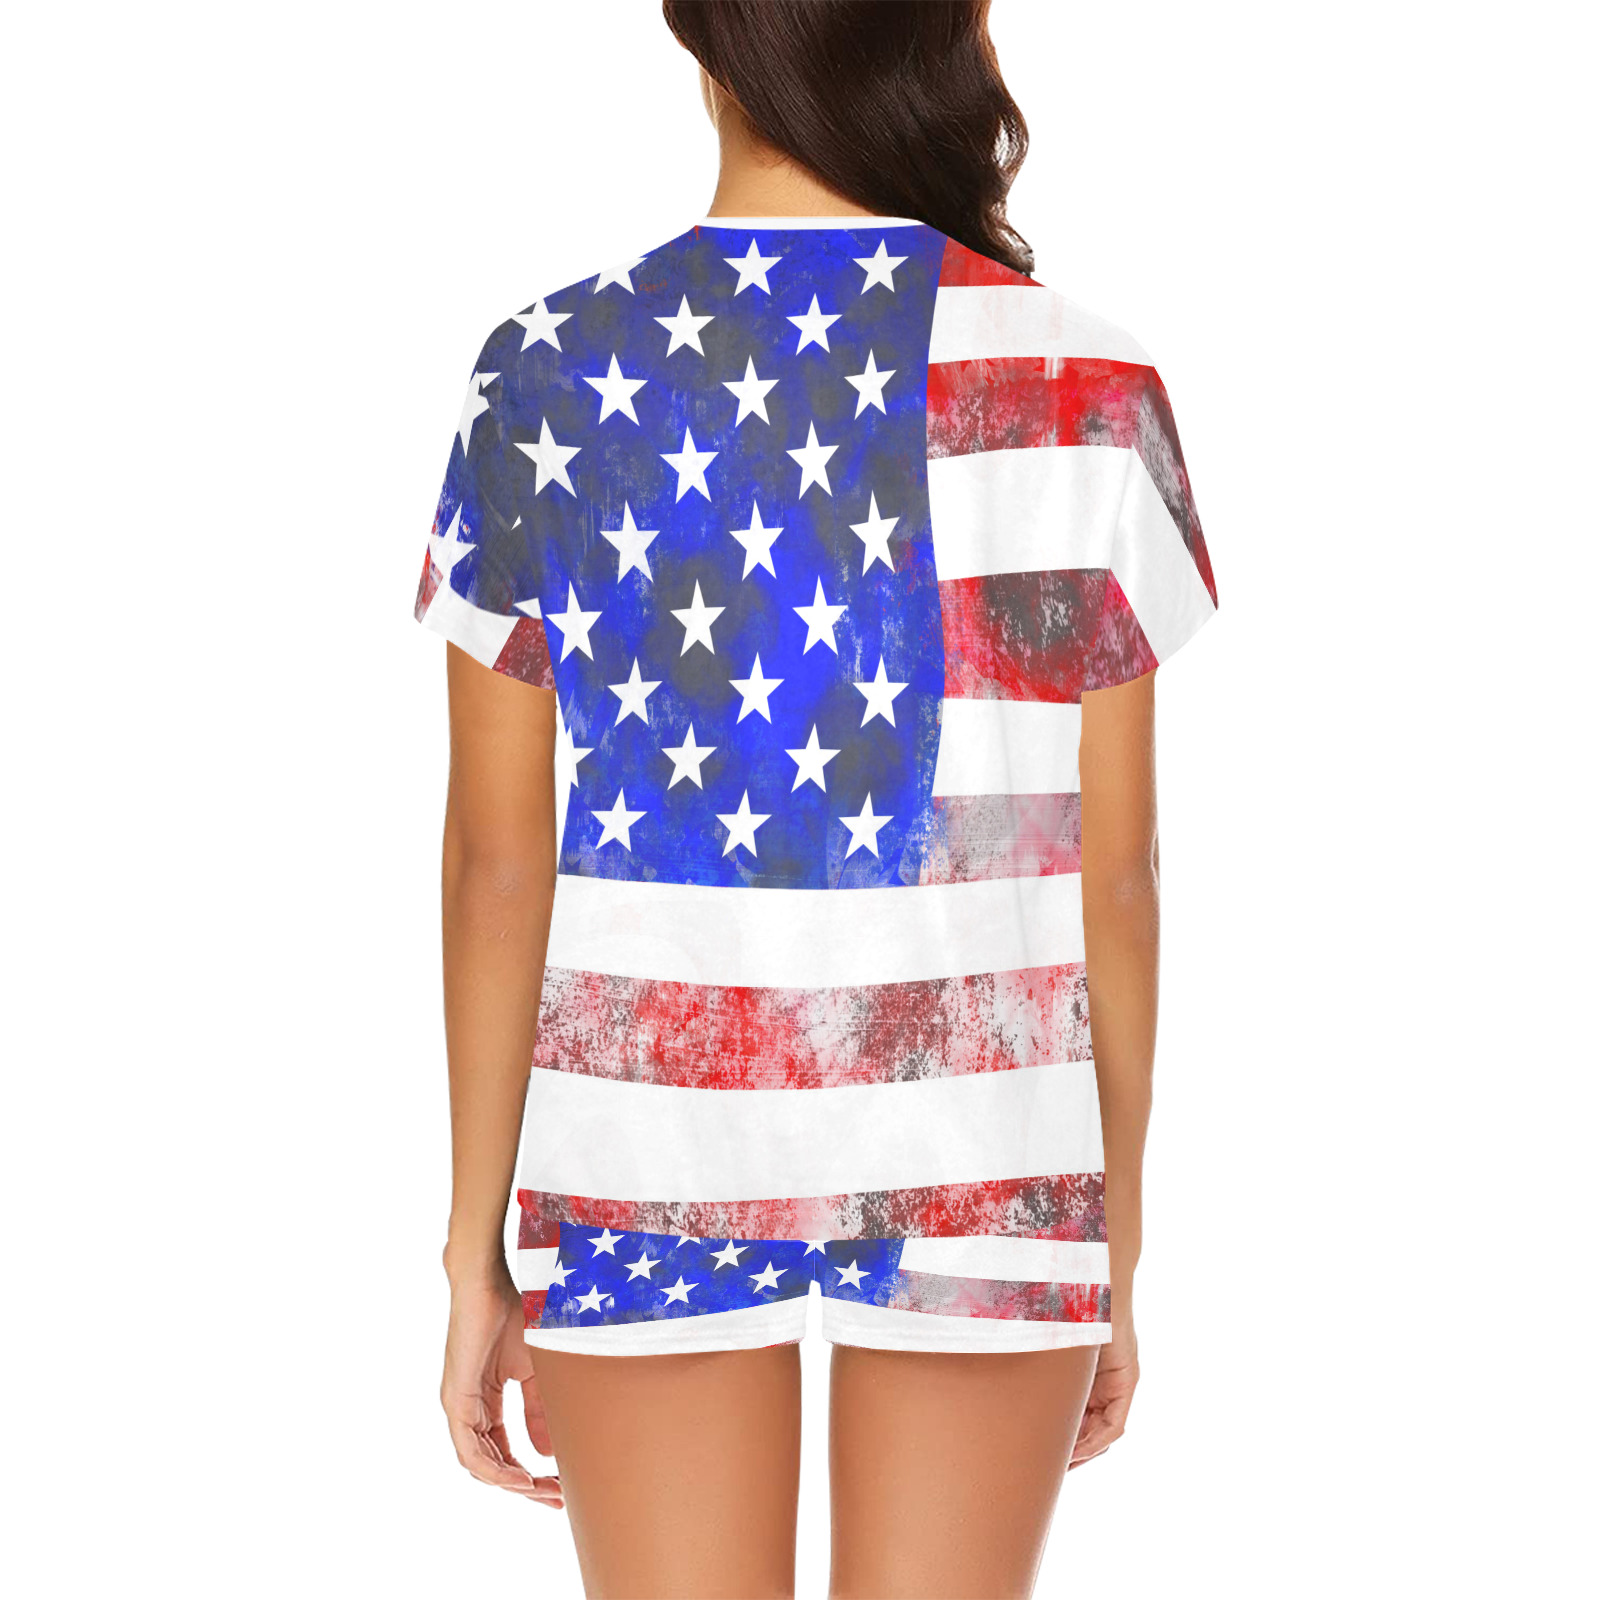 Extreme Grunge American Flag of the USA Women's Short Pajama Set